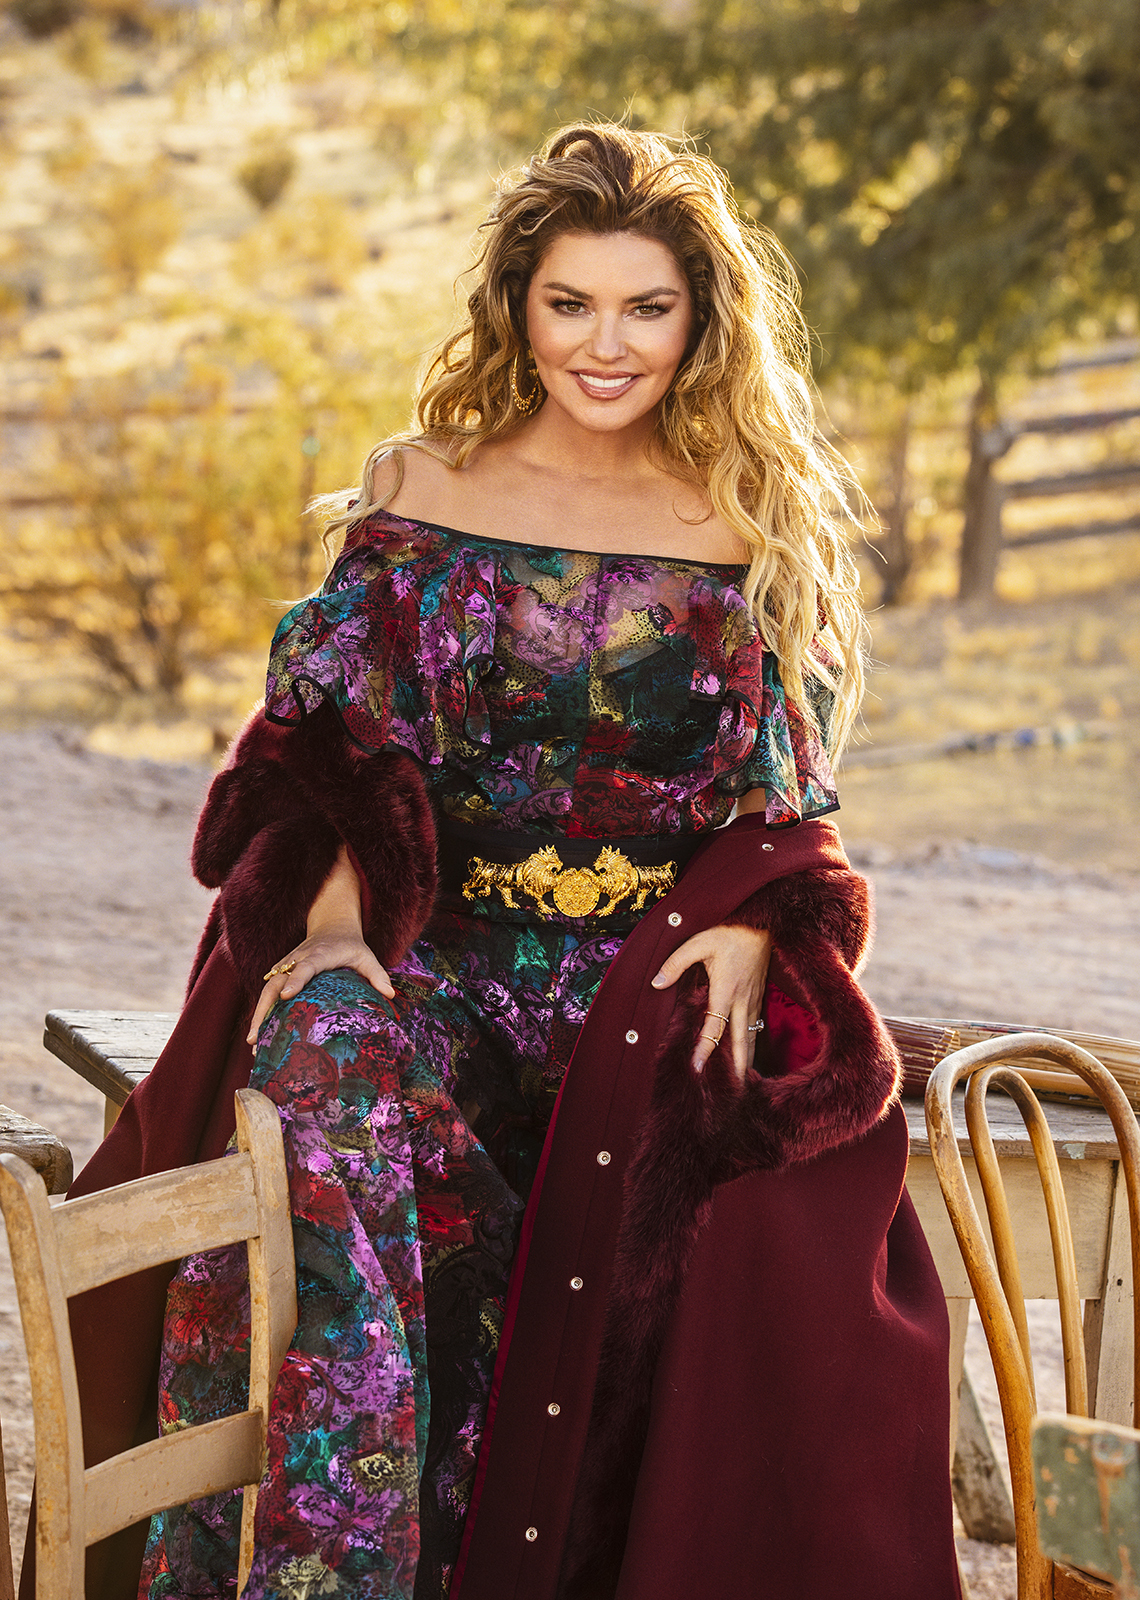 Shania Twain wearing a colorful dress outside on a horse farm